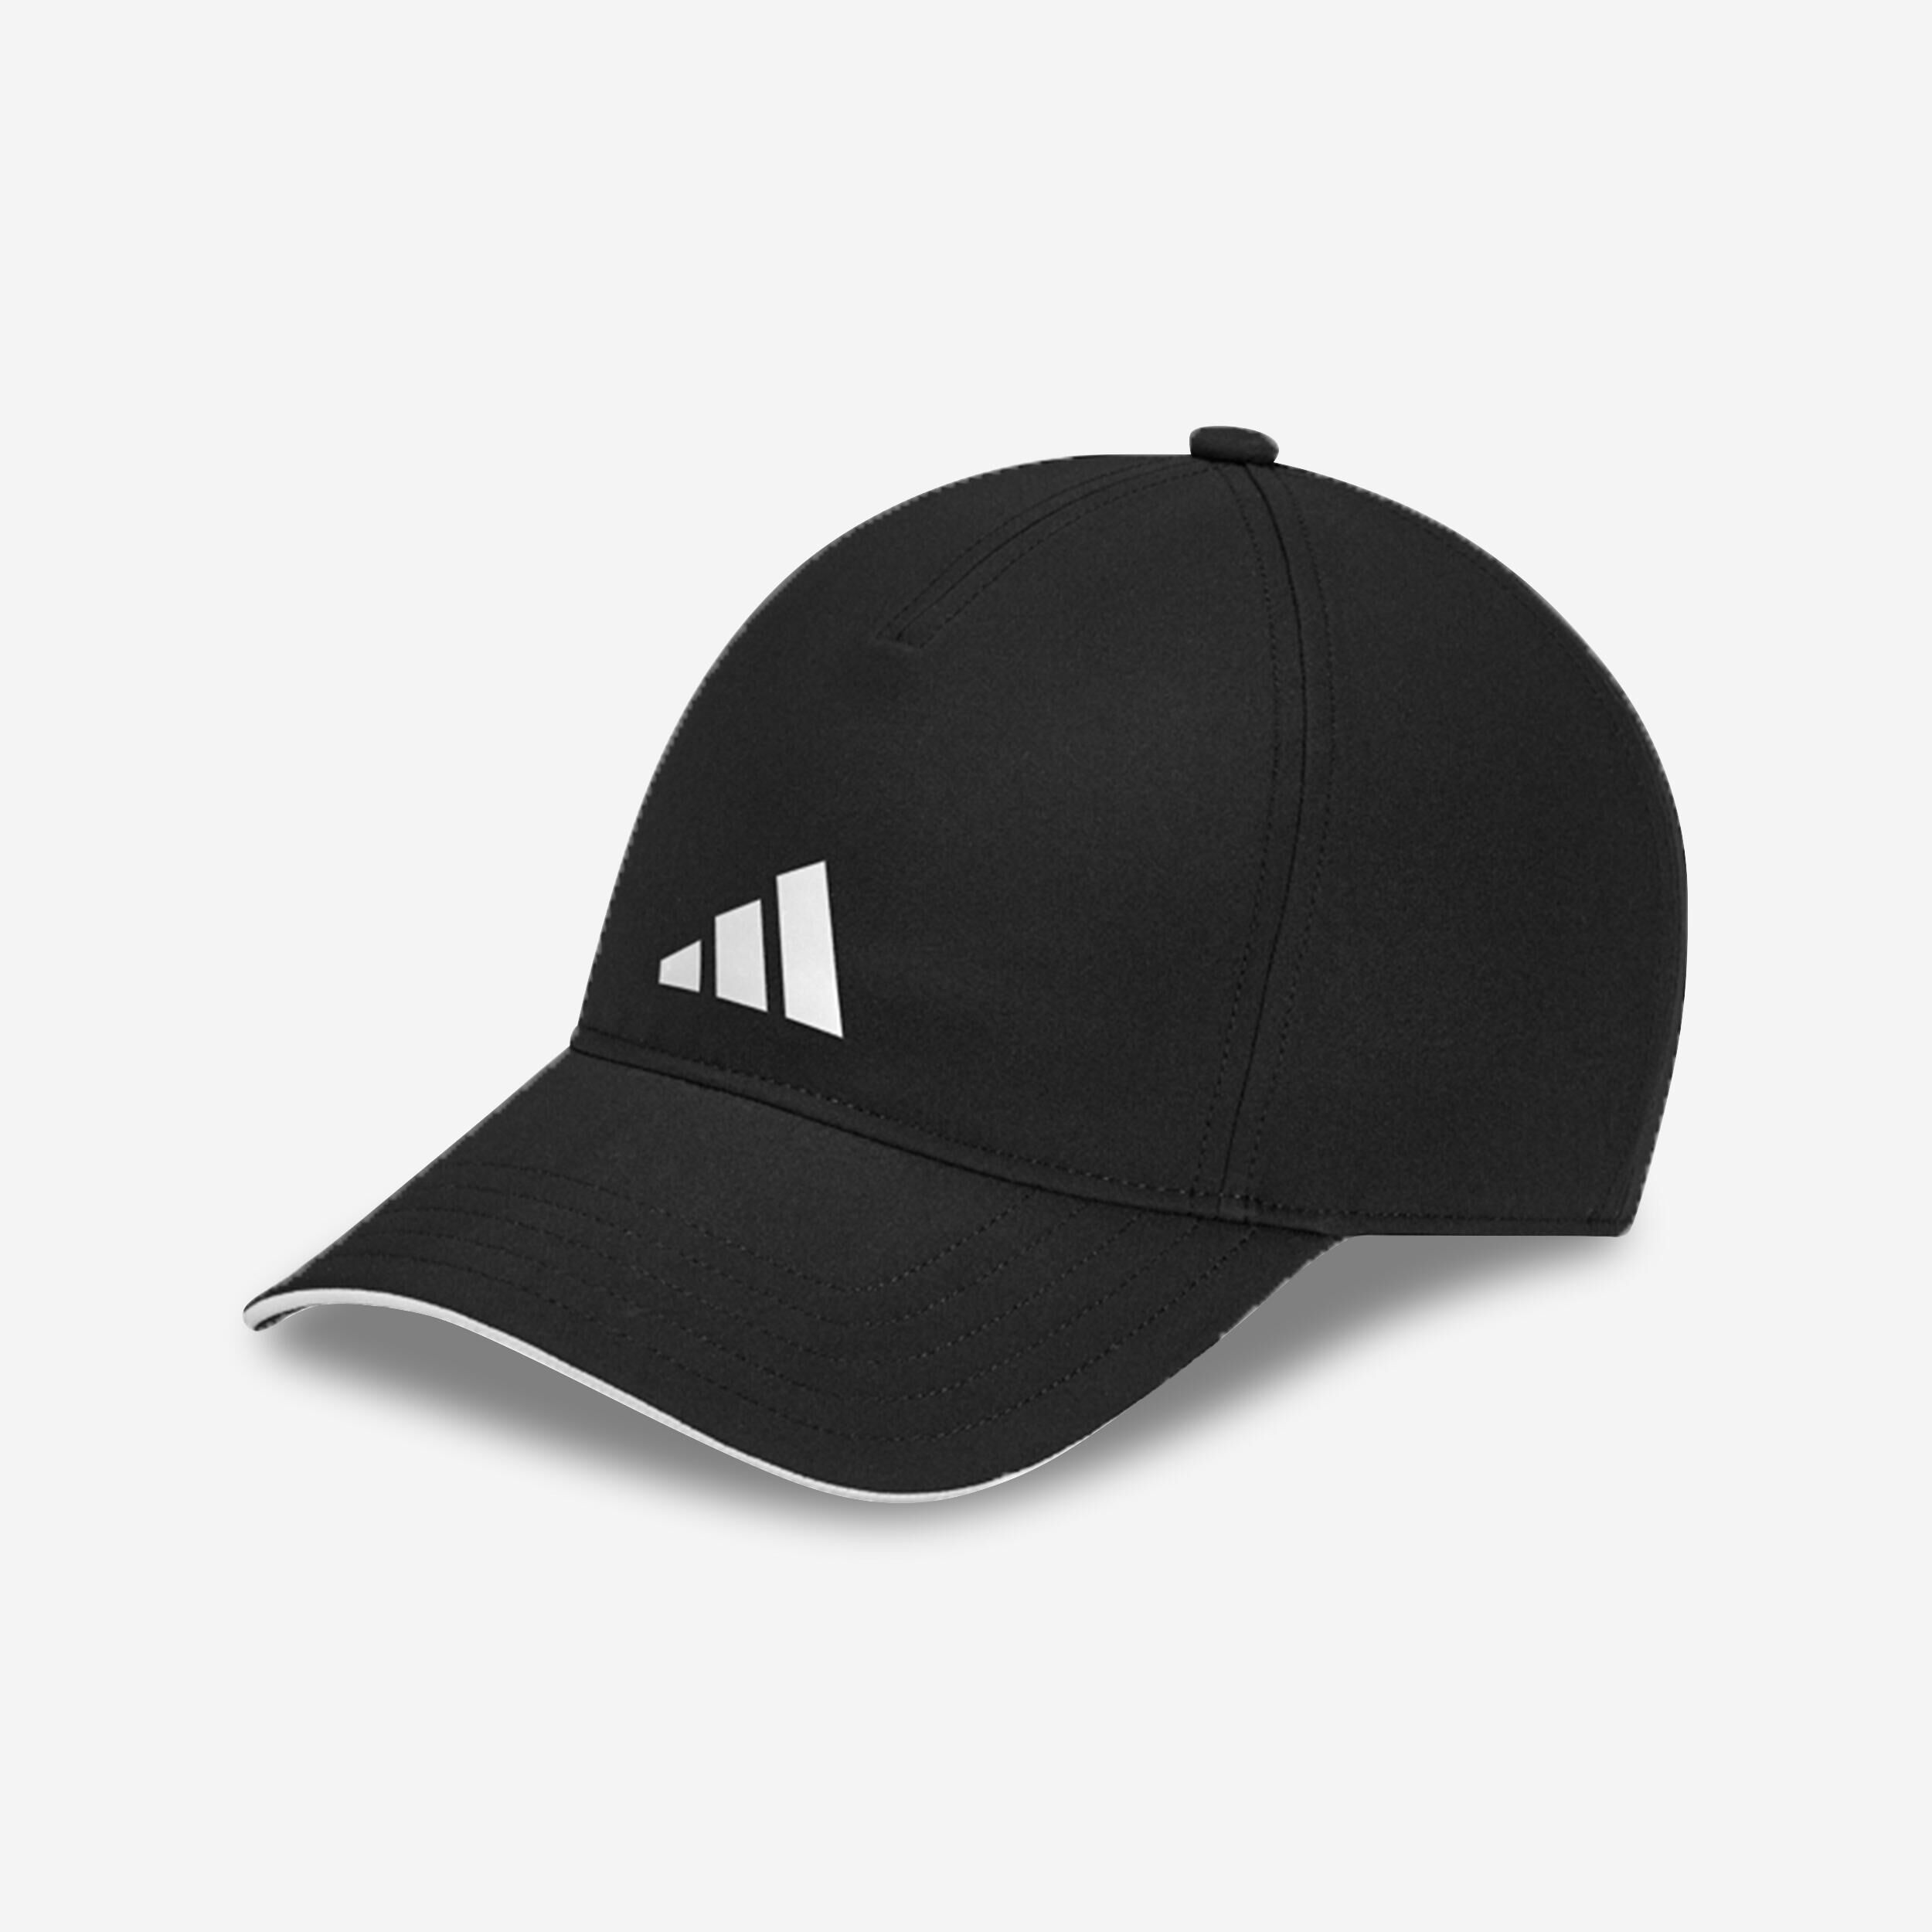 ADIDAS Sports Cap Size 58 cm - Black